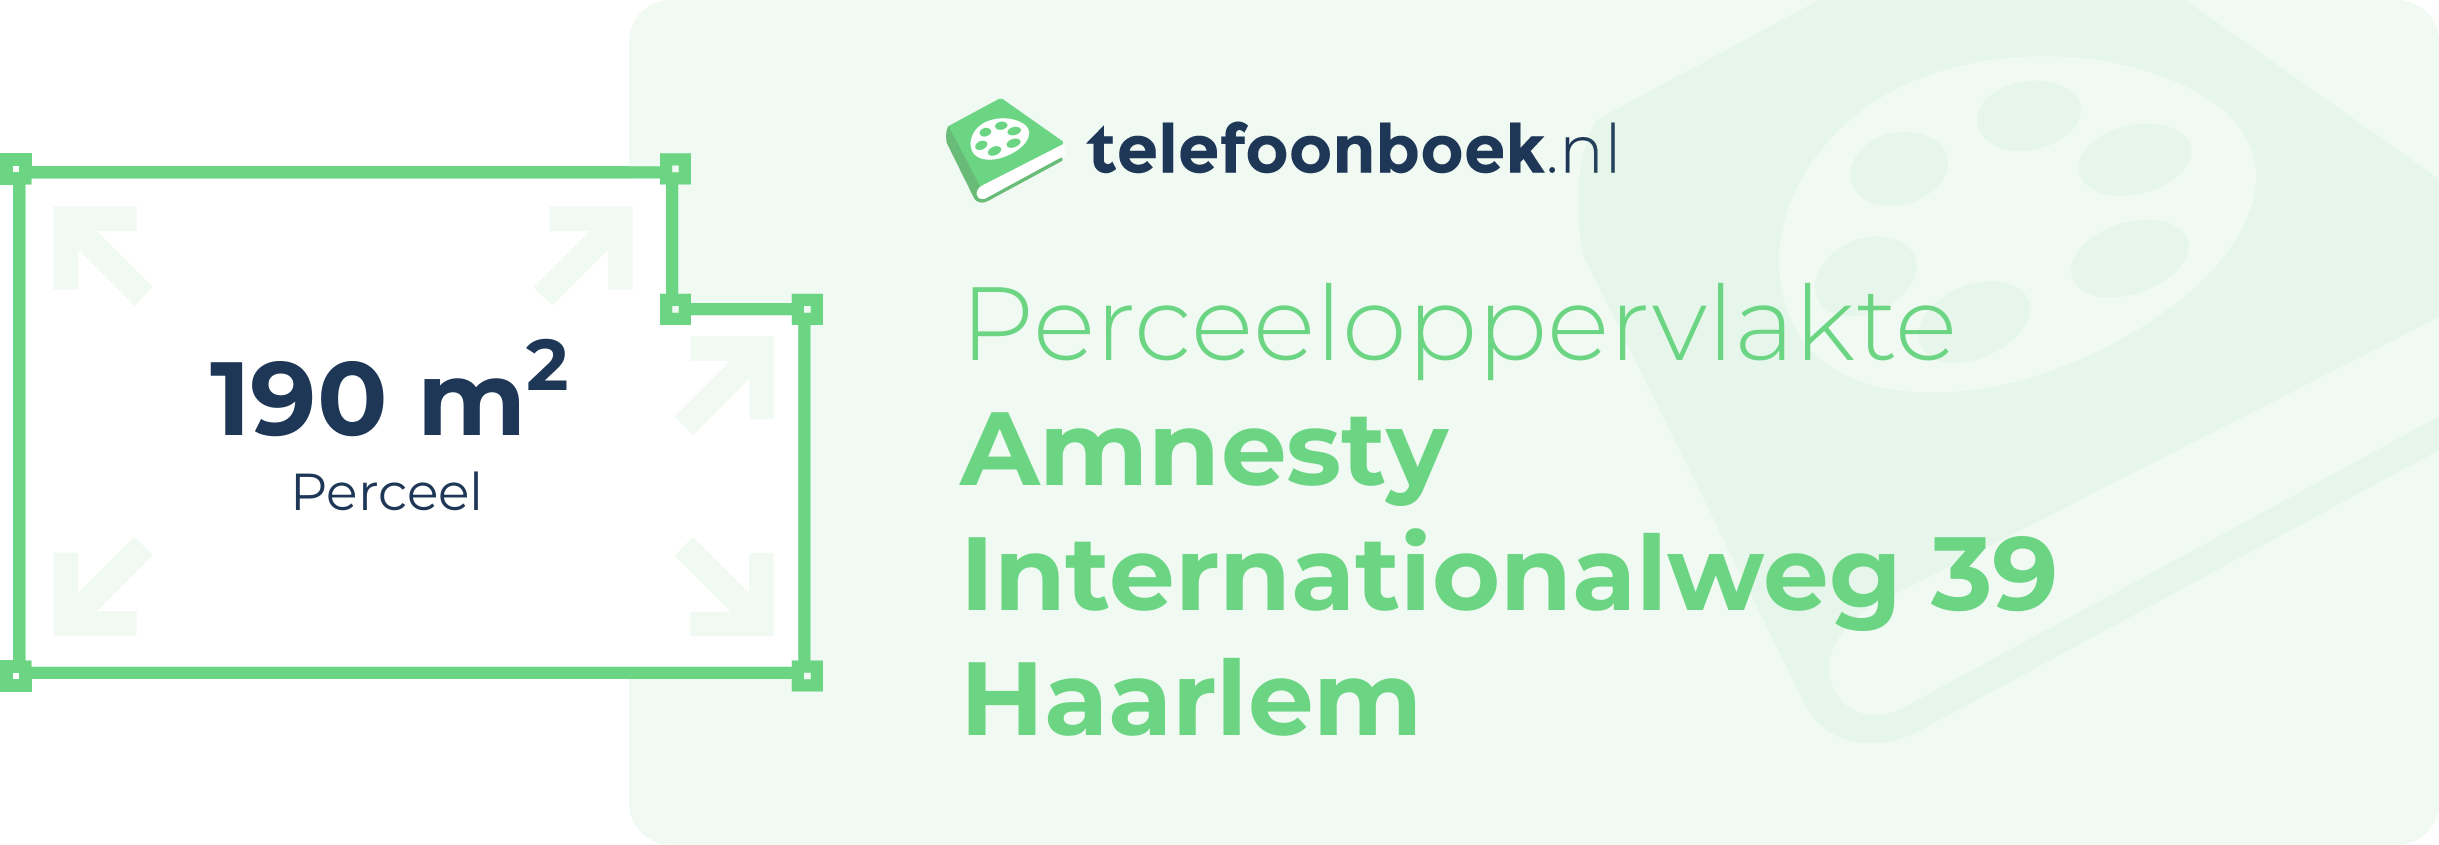 Perceeloppervlakte Amnesty Internationalweg 39 Haarlem